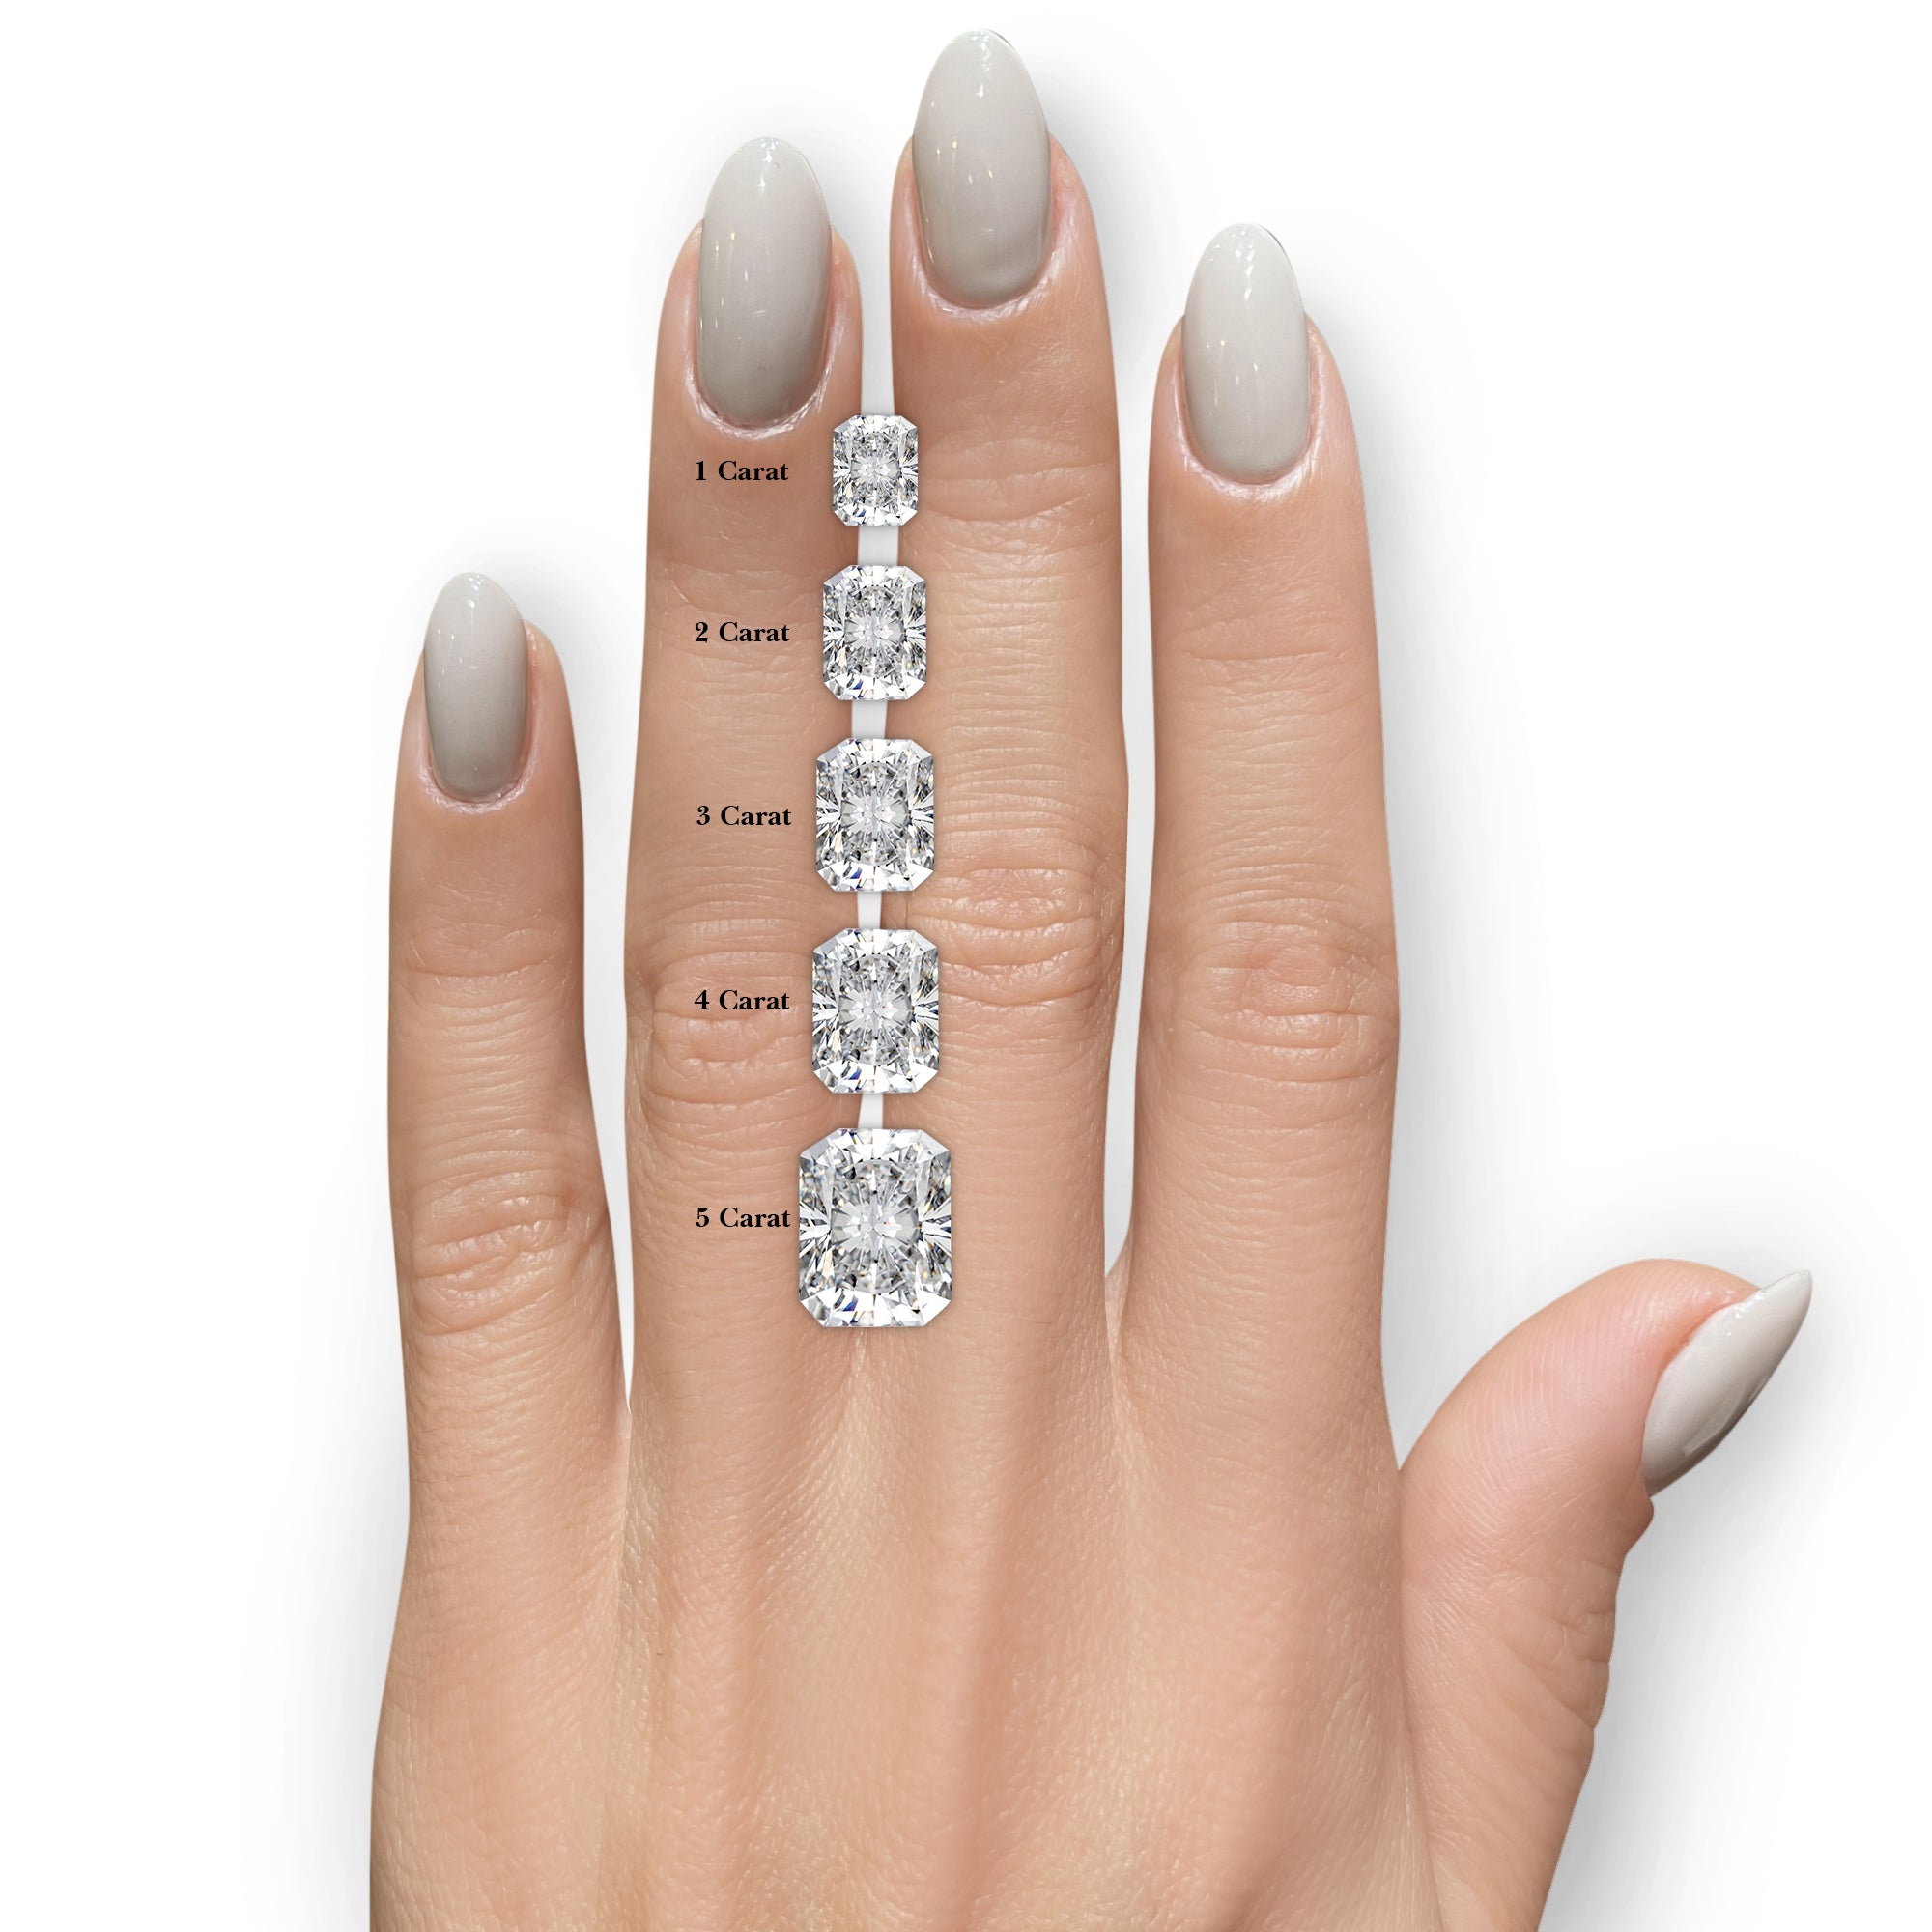 Harper Lab Grown Diamond Ring -18K White Gold